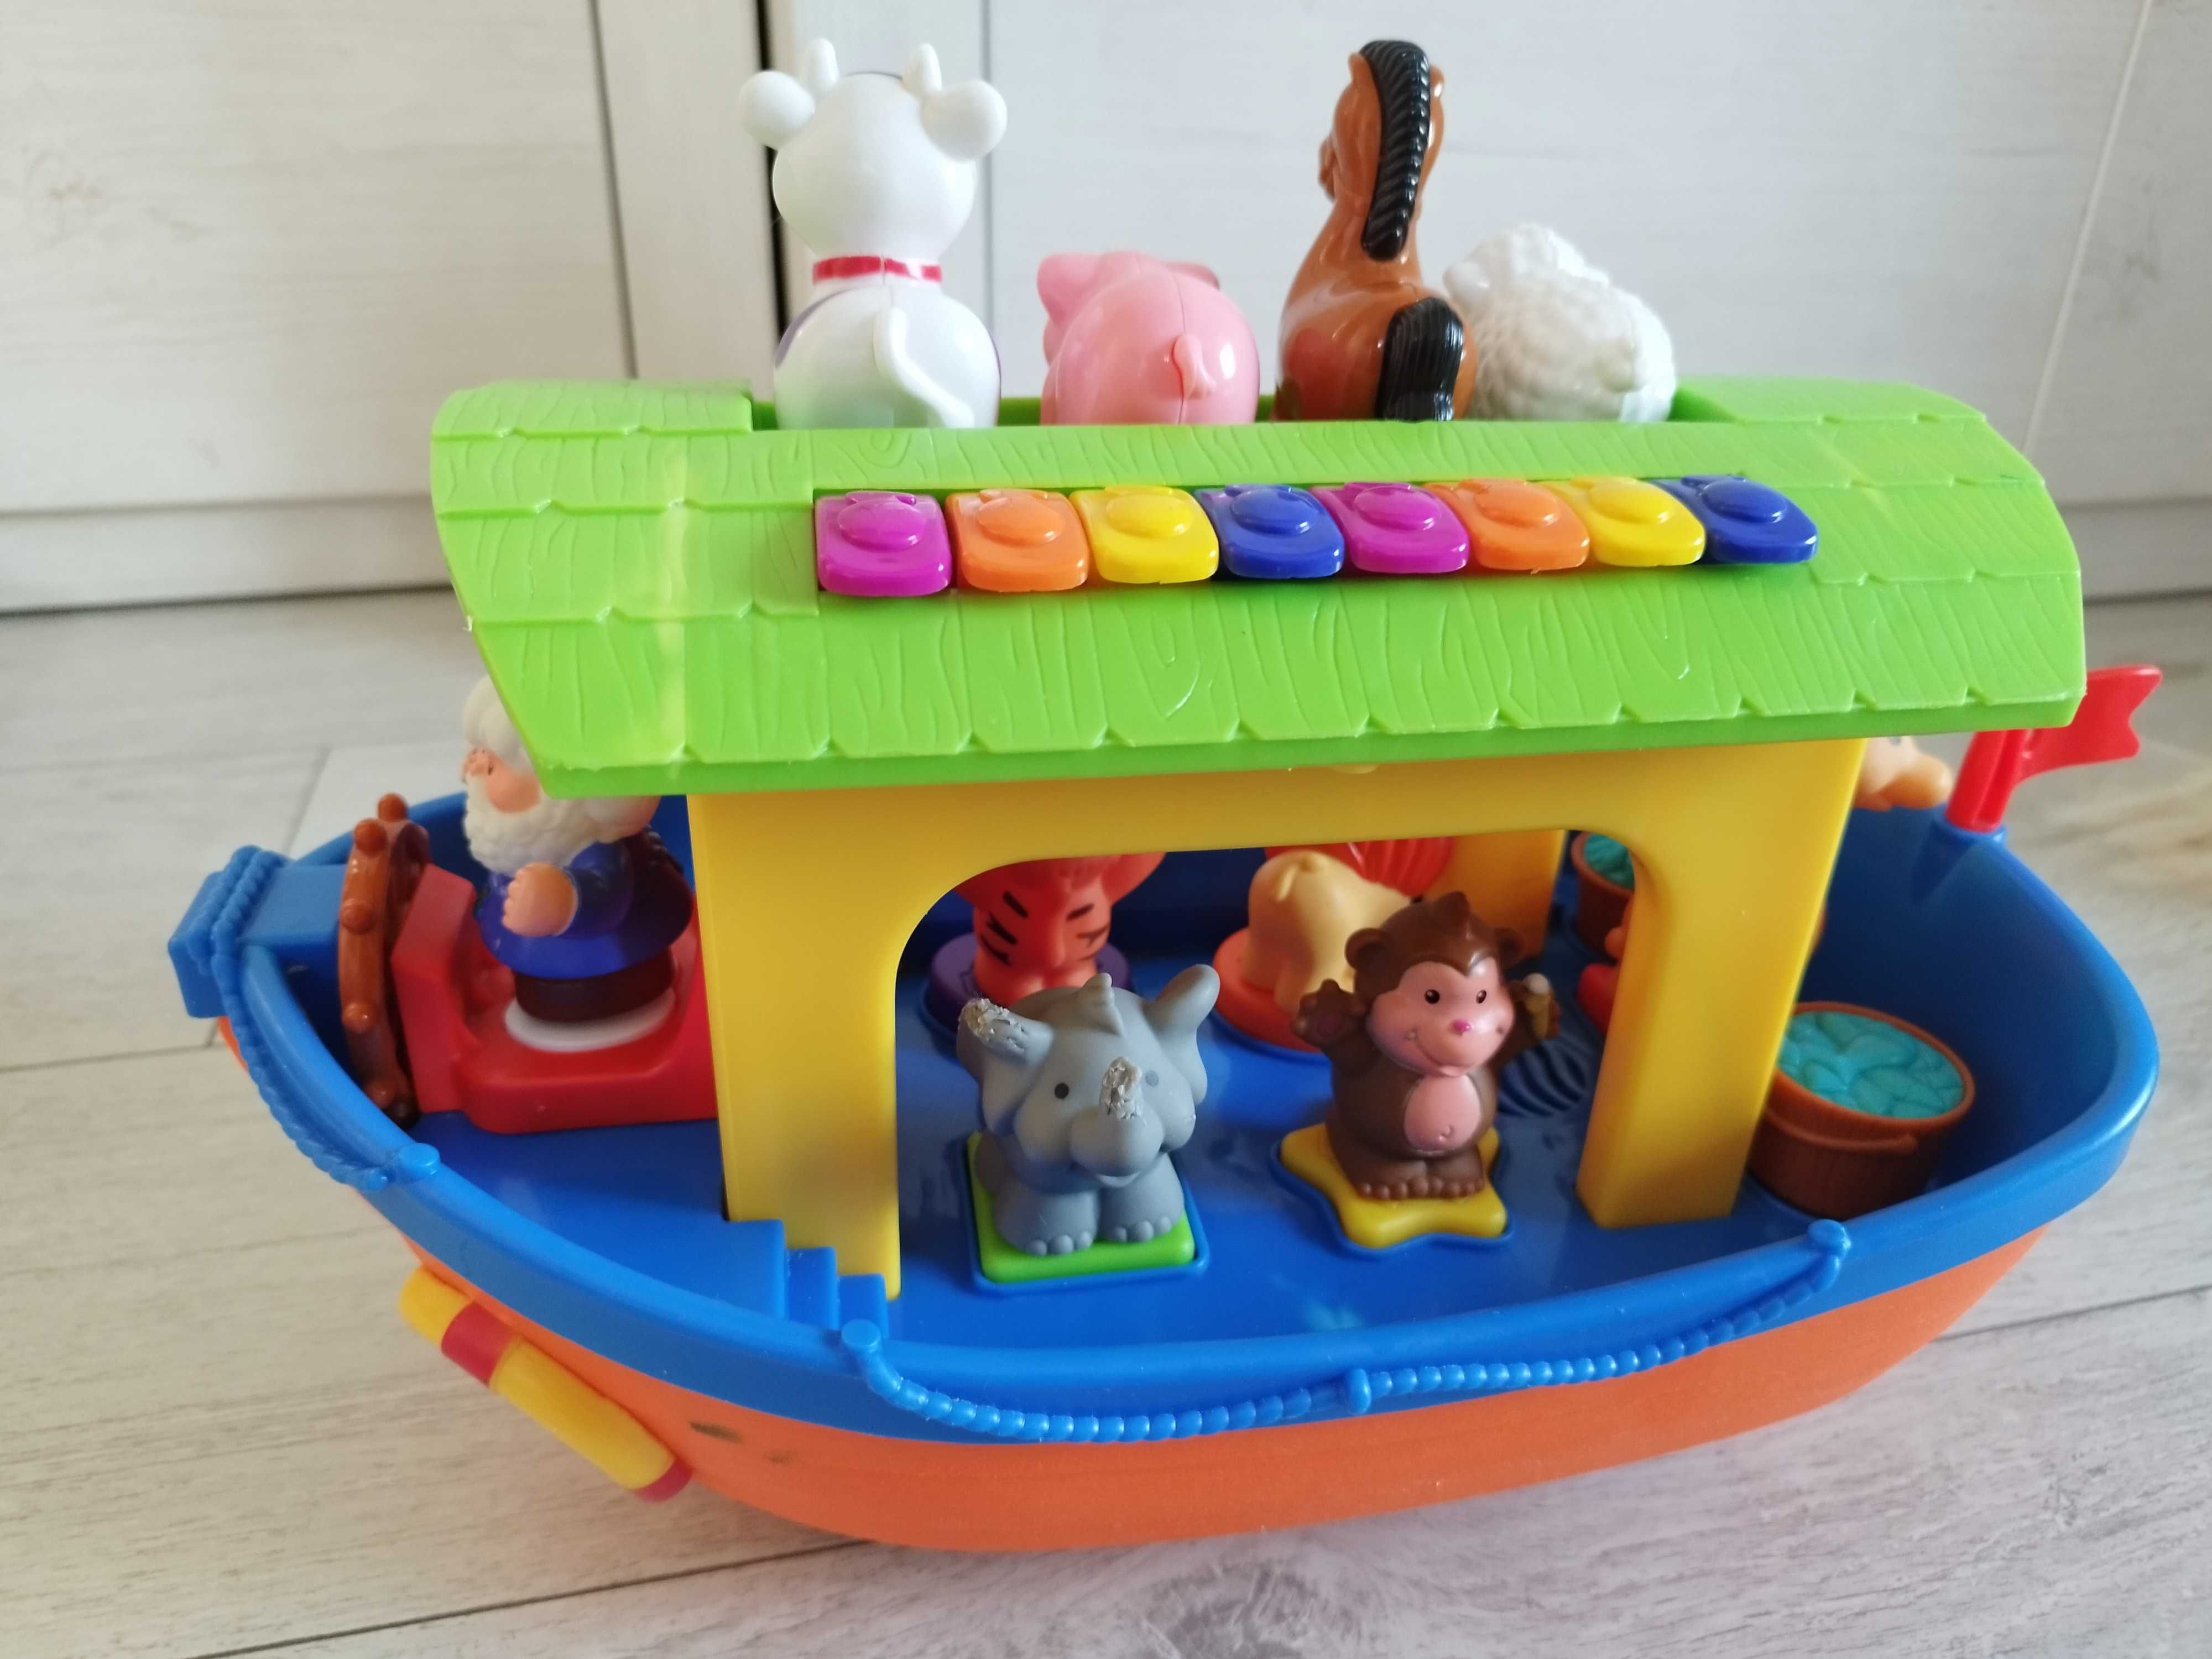 Zabawka edukacyjna Arka Noego